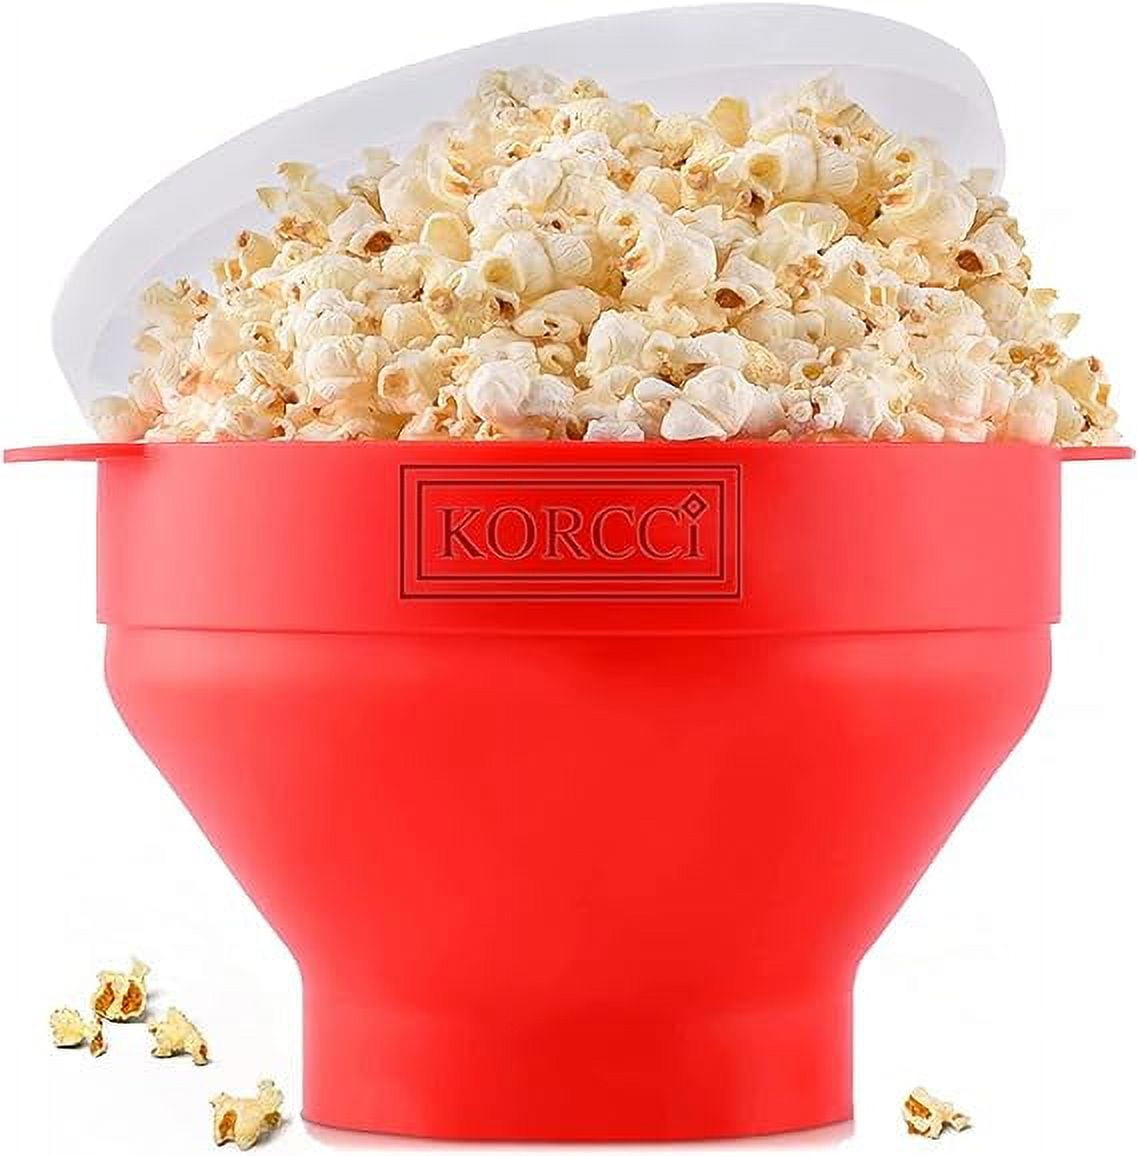 Elite Gourmet 3 Qt. Popcorn Popper